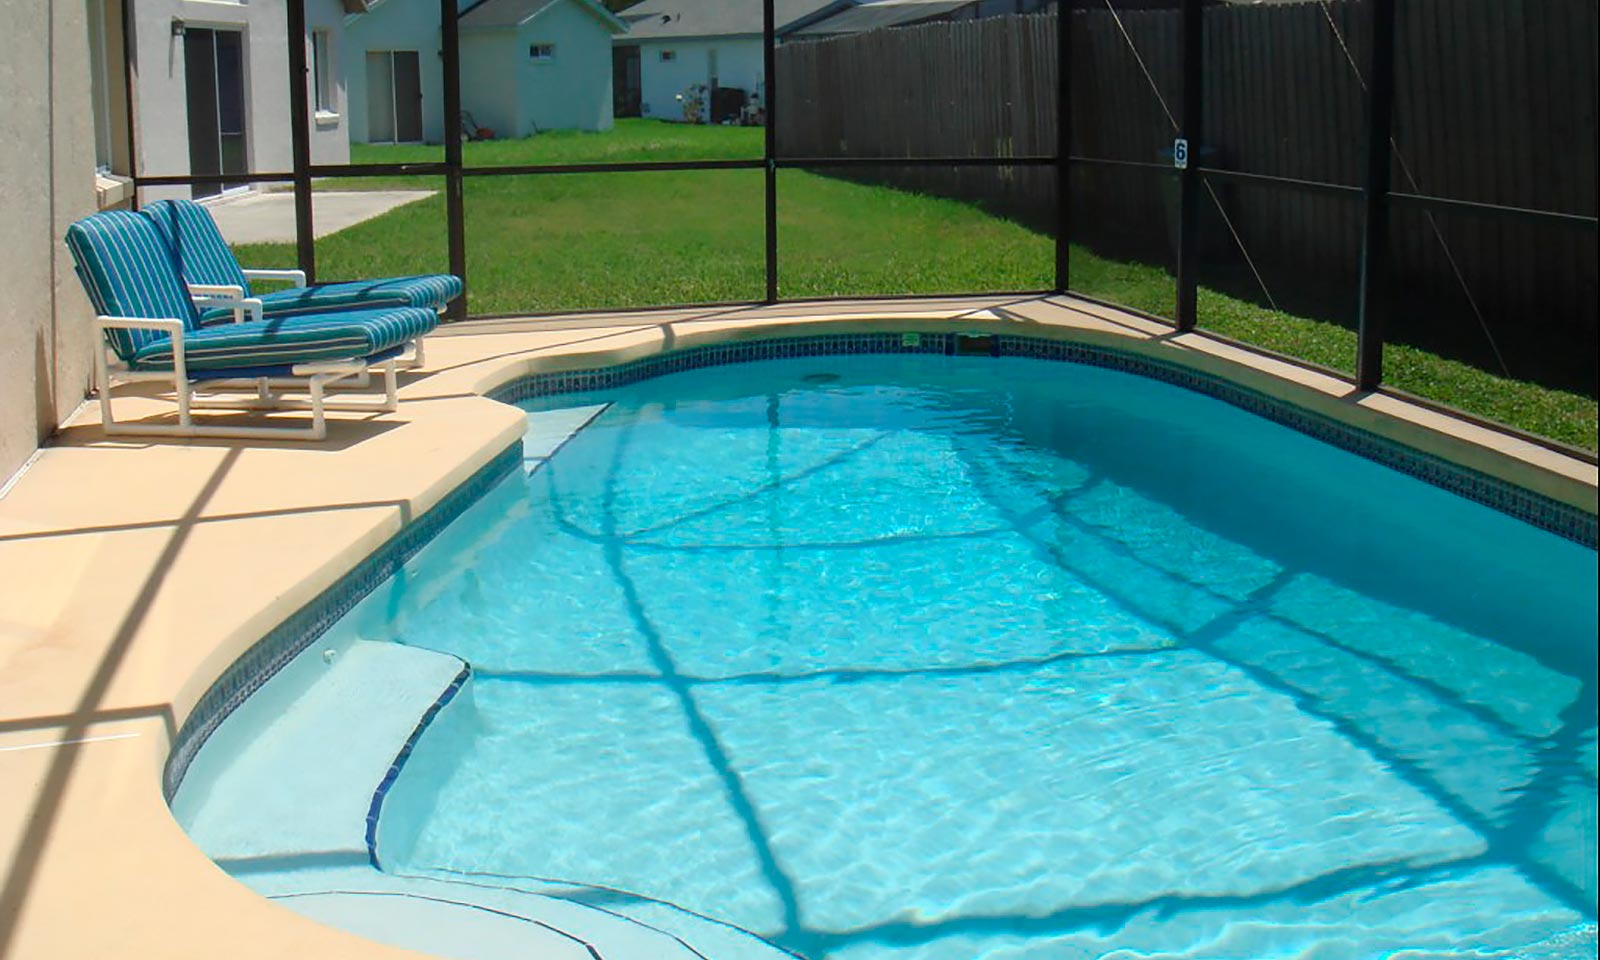 [amenities:screened-in-pool:1] Screened In Pool